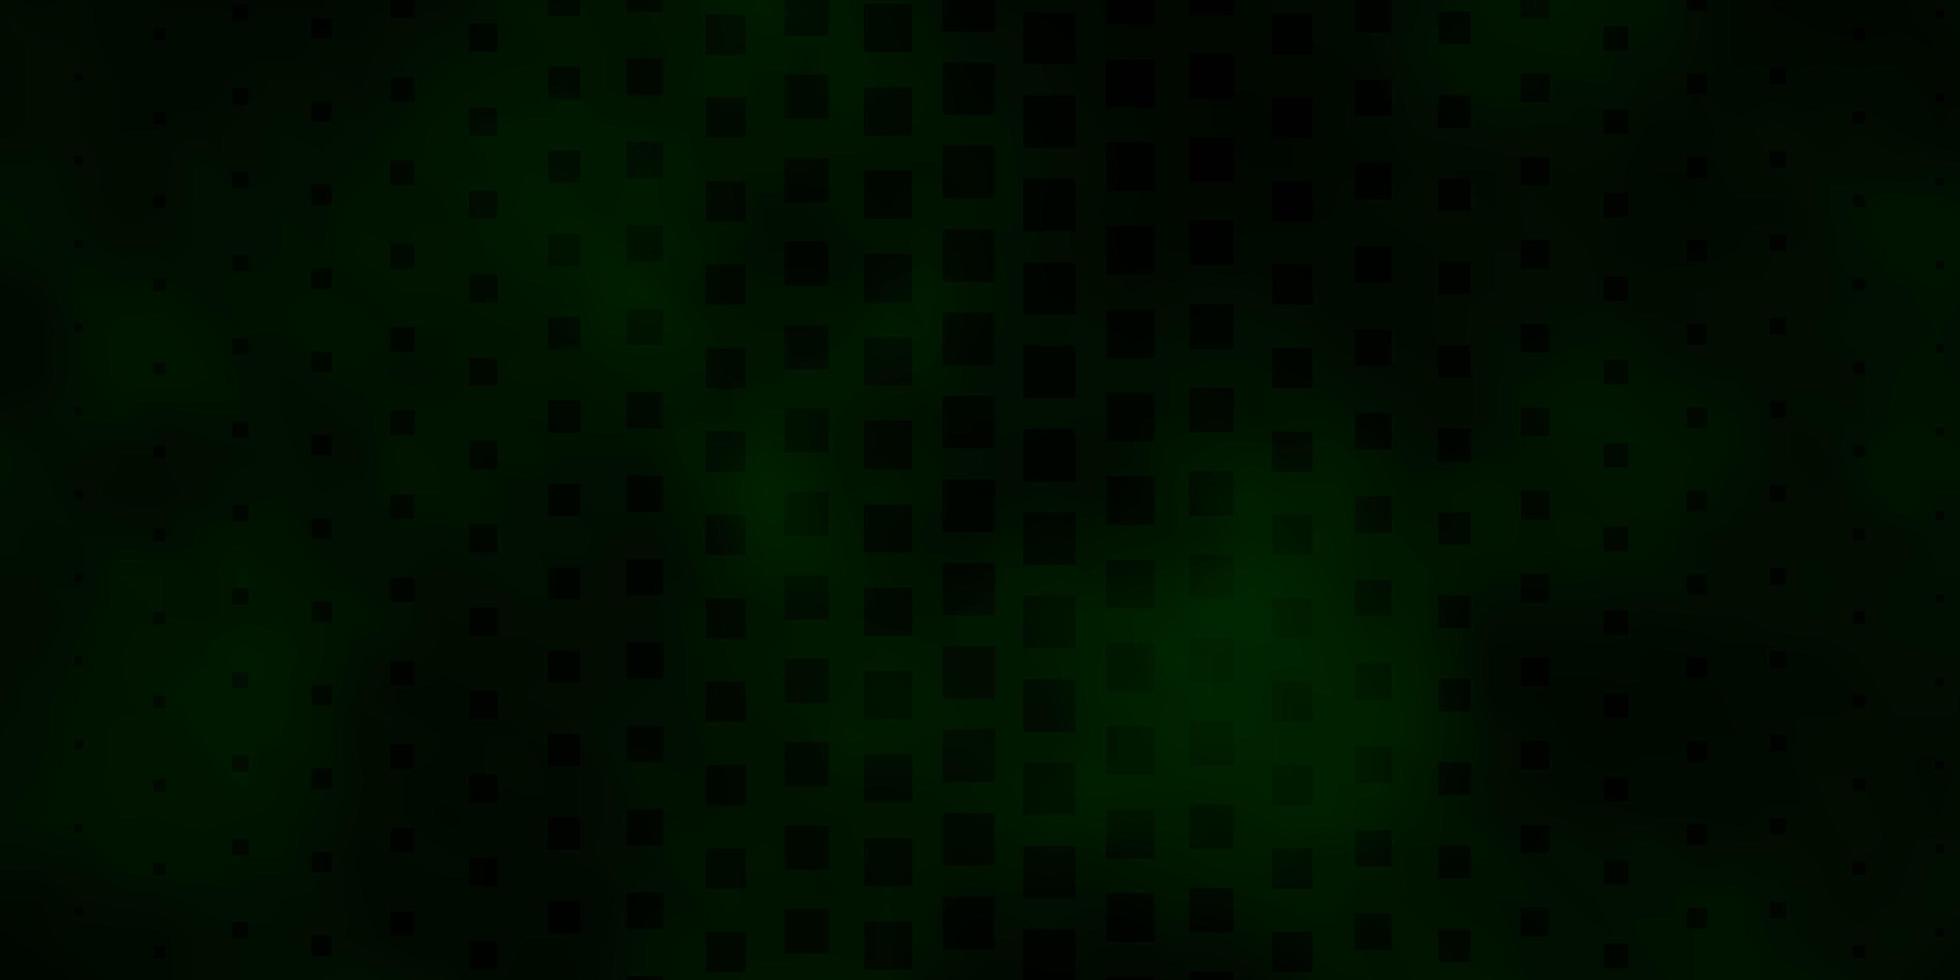 Dark Green vector backdrop with rectangles.